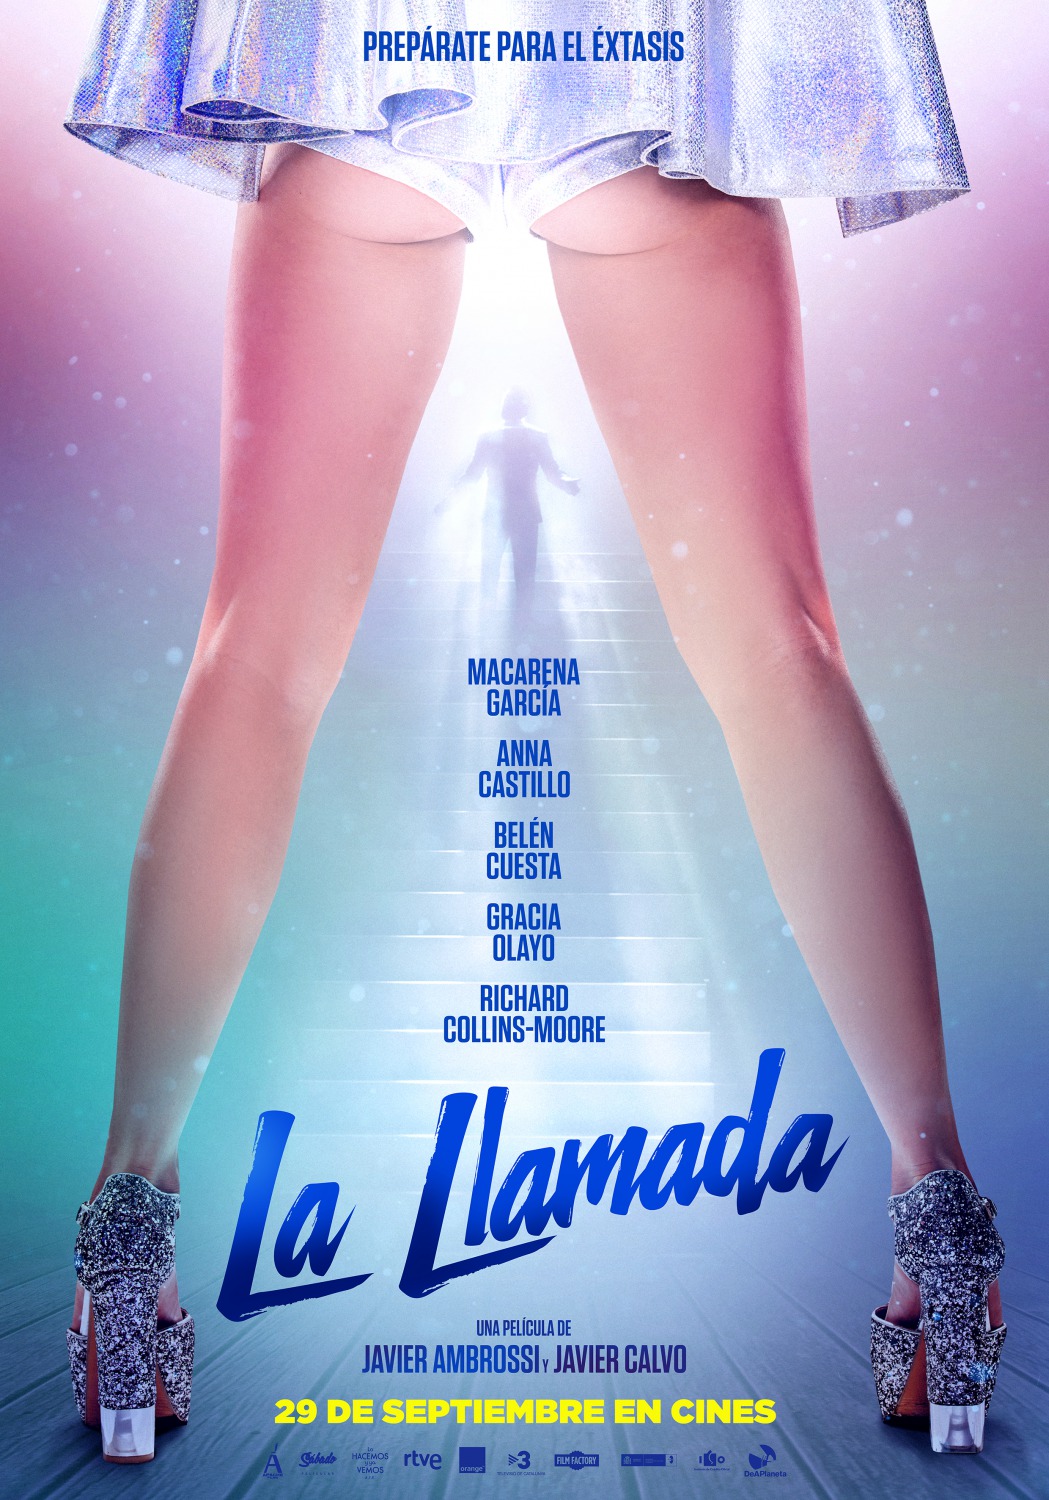 Extra Large Movie Poster Image for La llamada (#6 of 6)